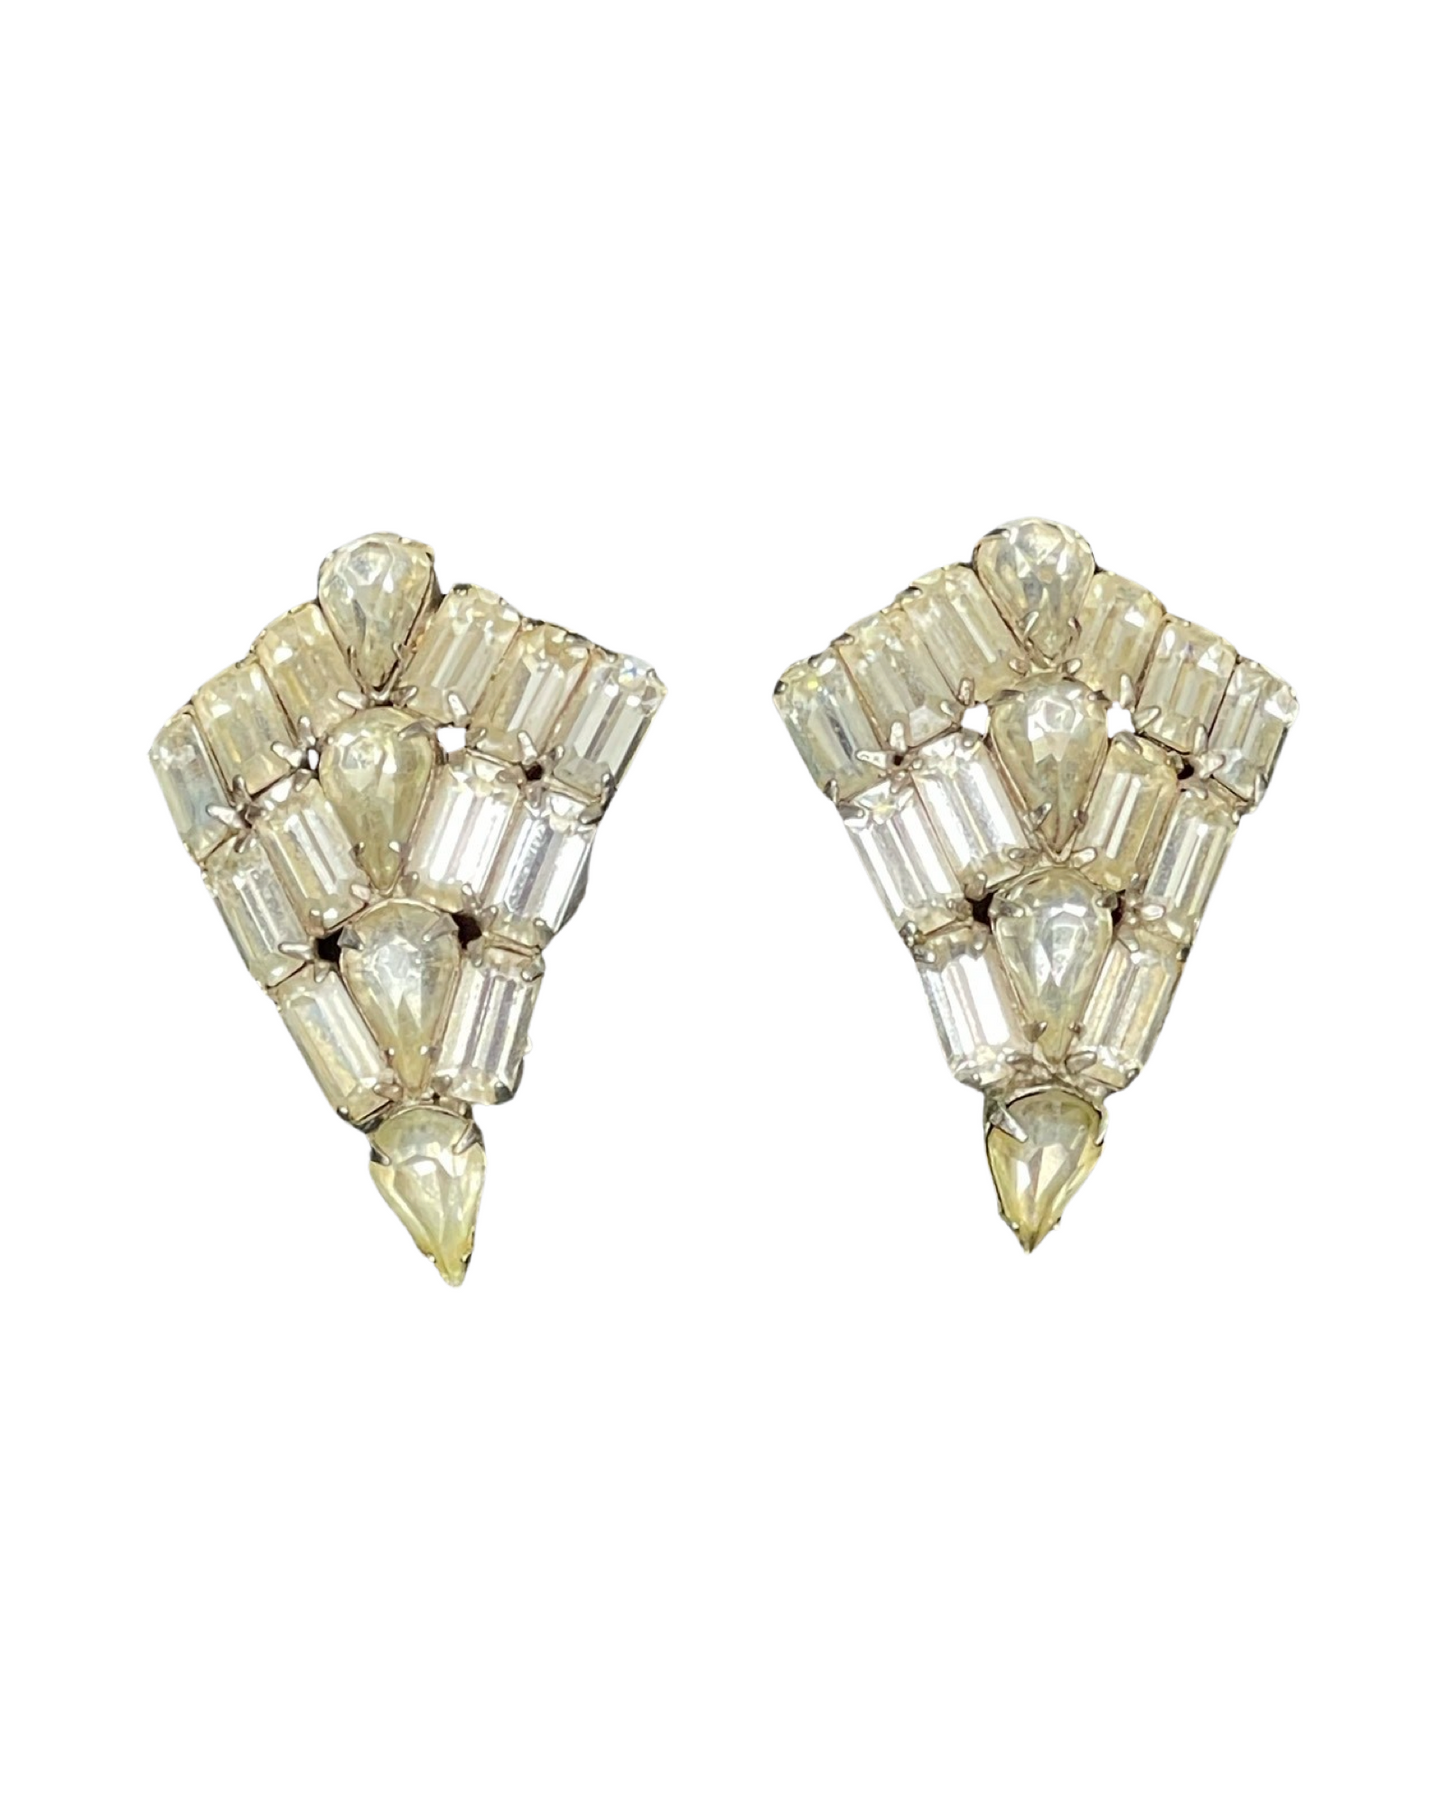 Glam Rhinestone Earrings c. 1920’s